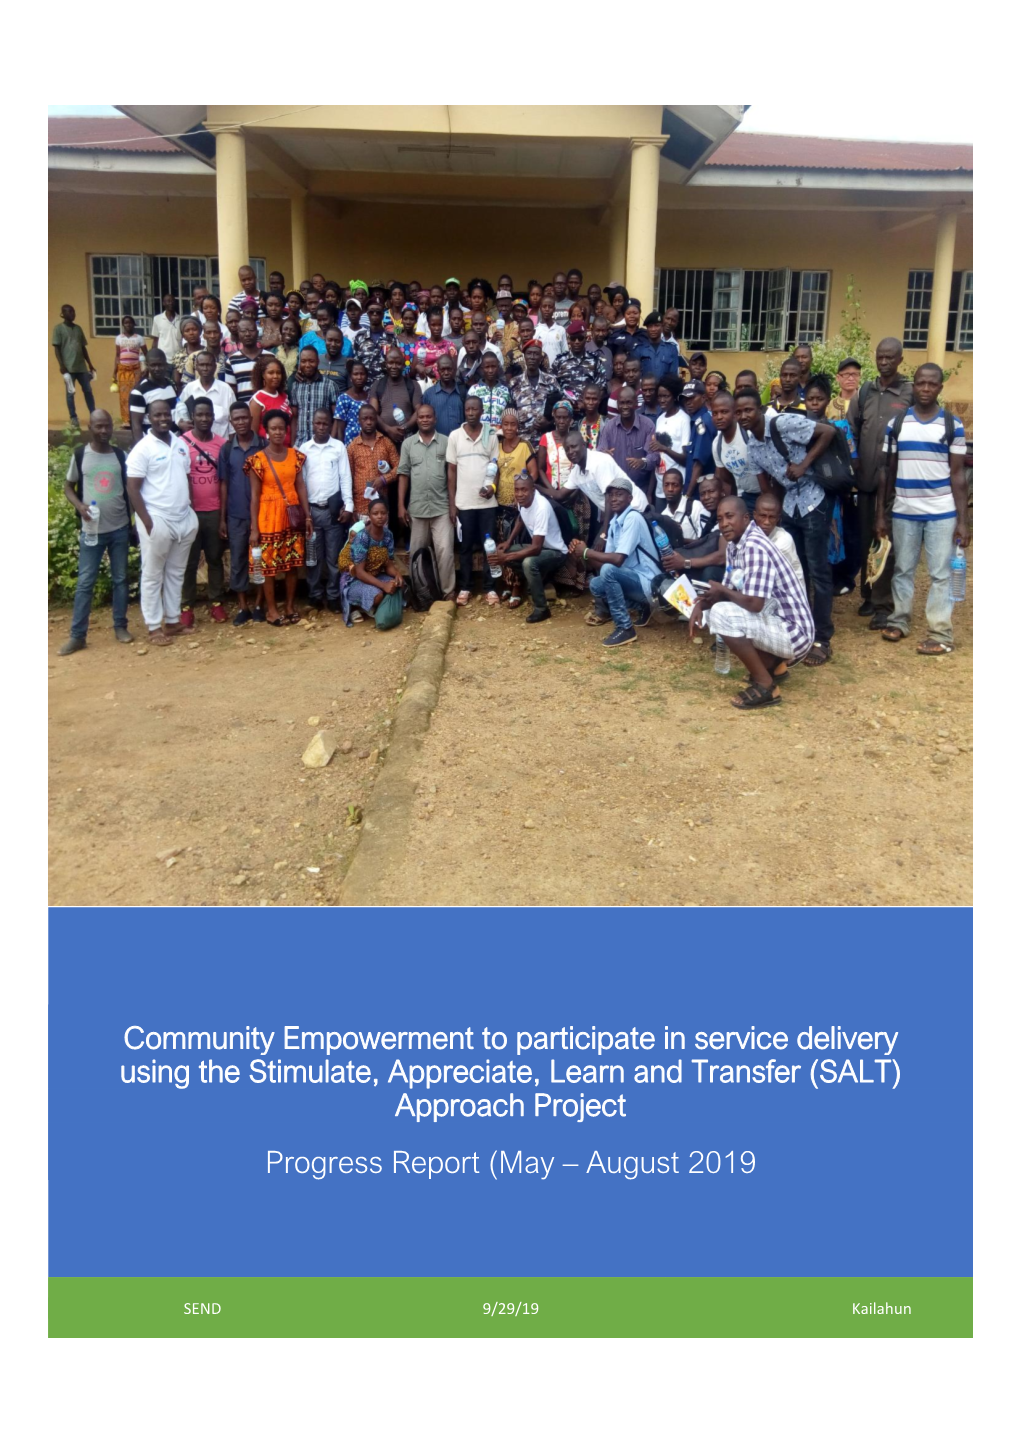 (SALT) Approach Project Progress Report (May – August 2019